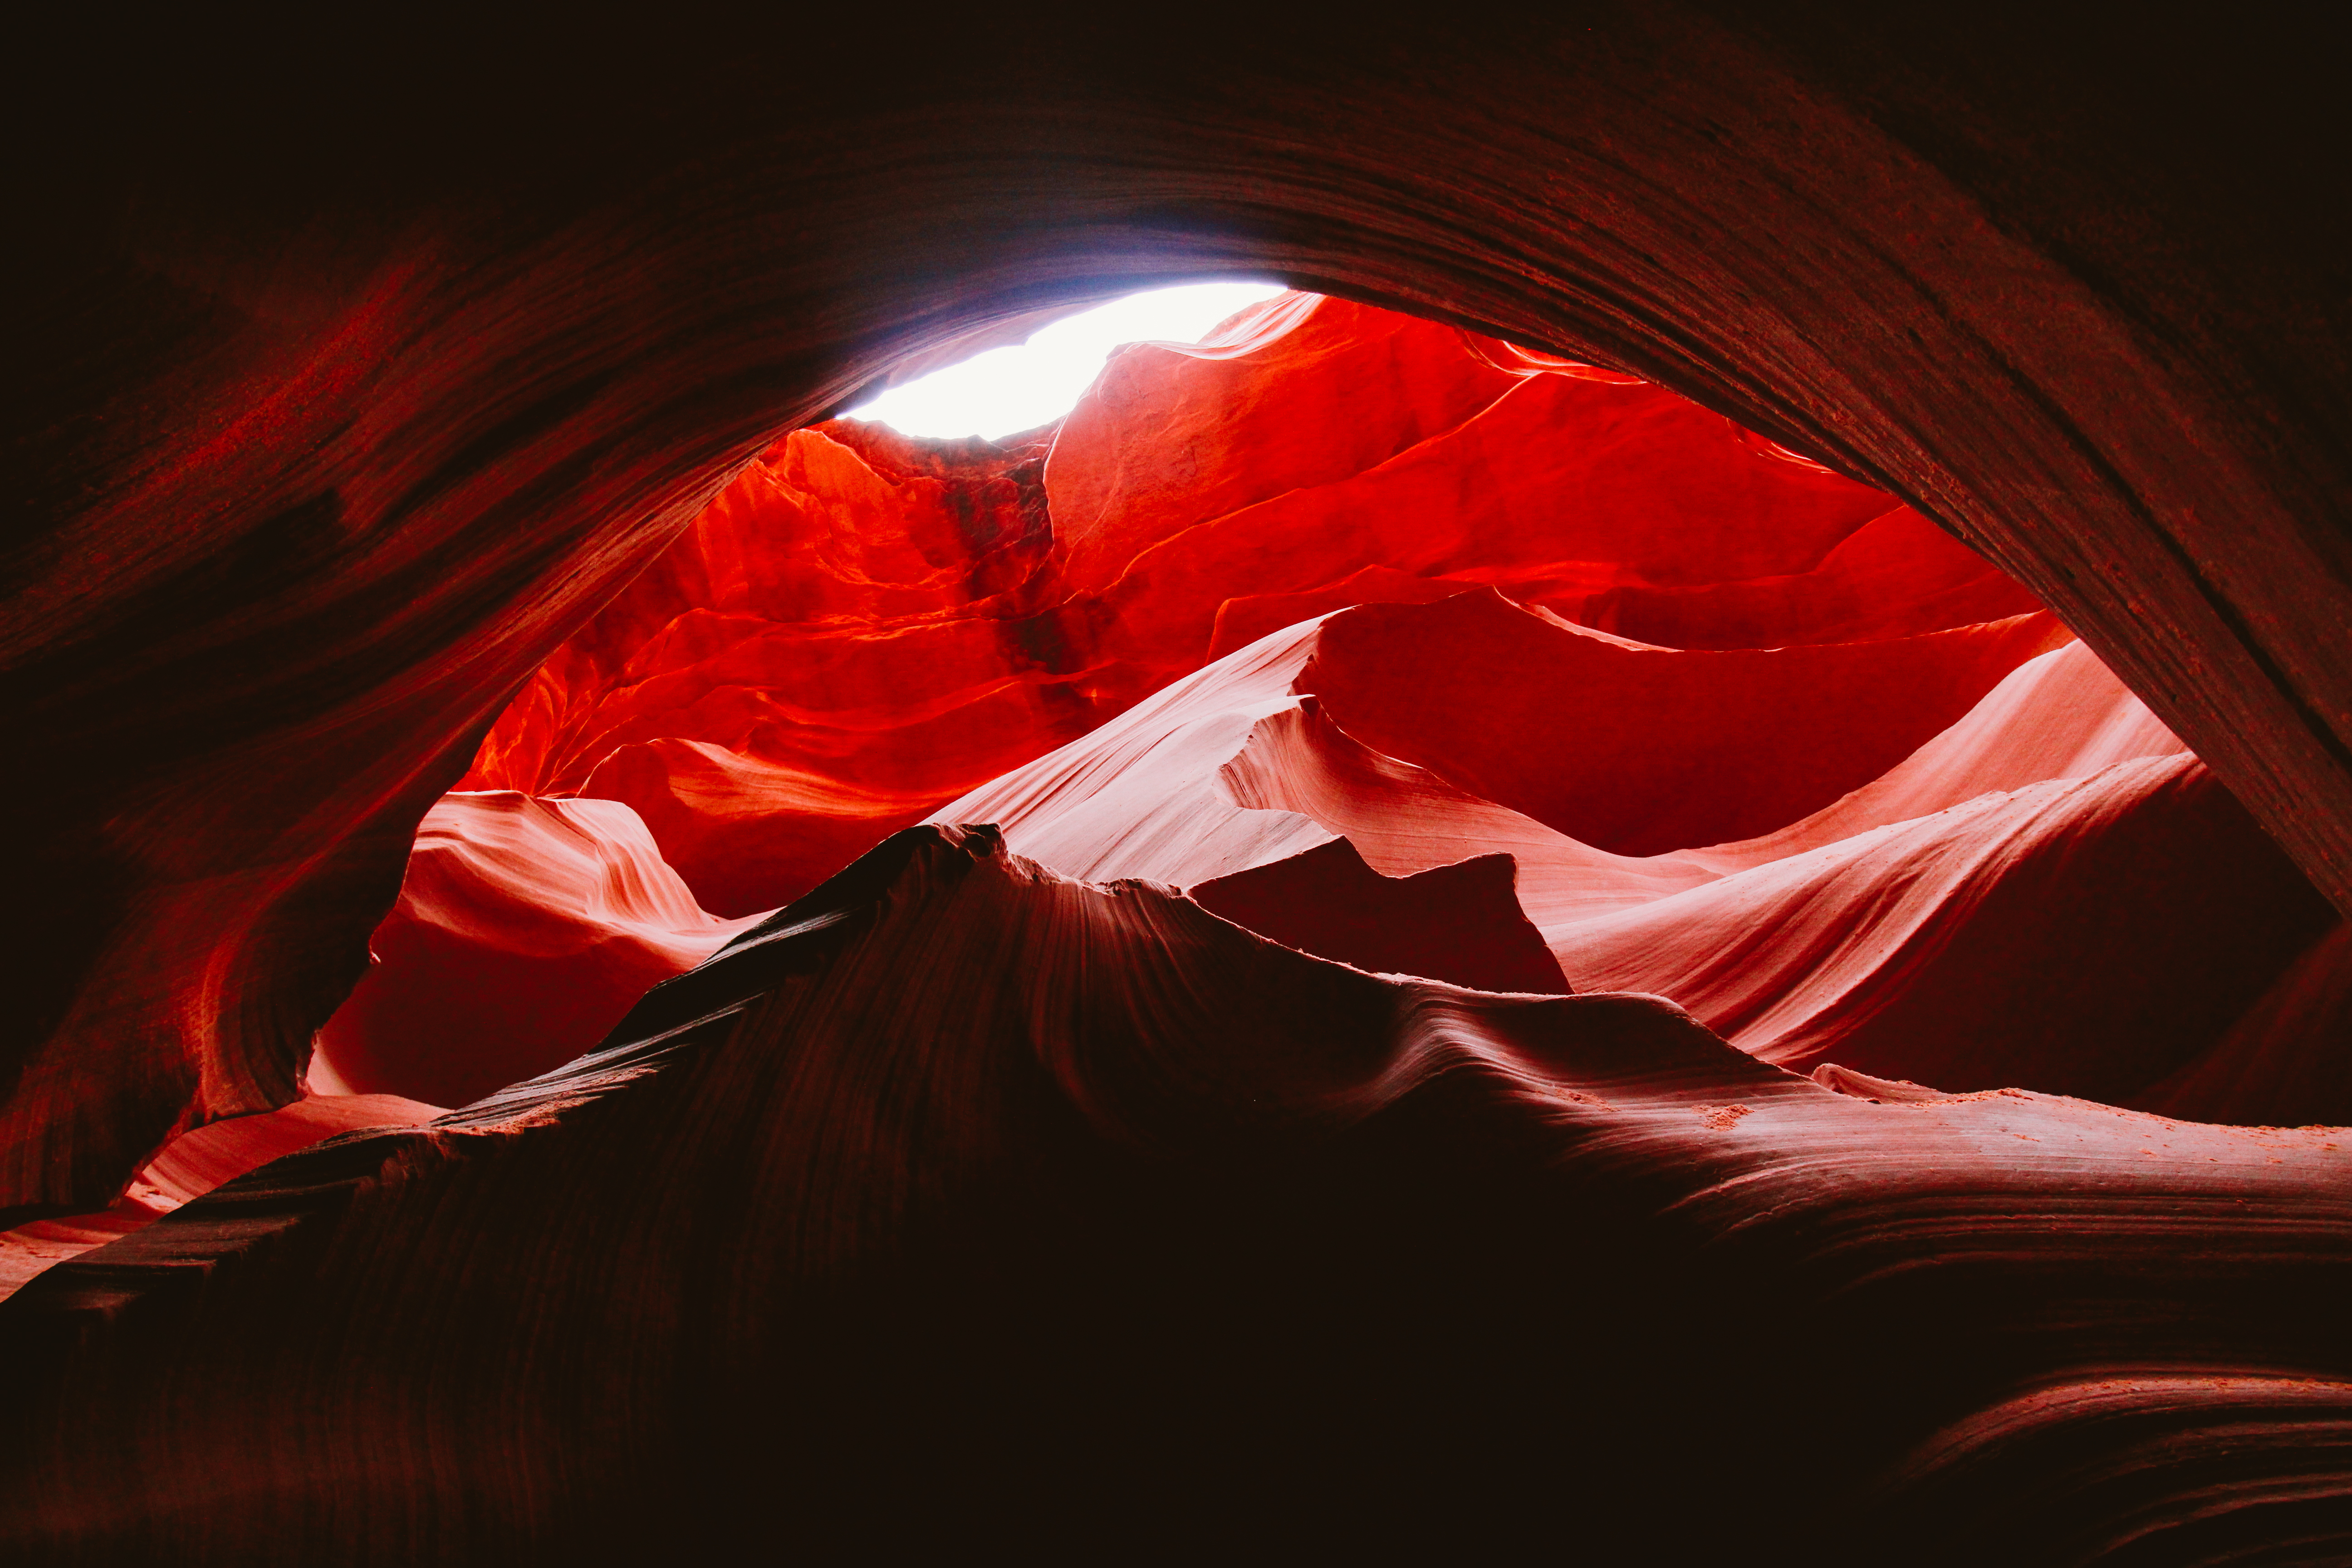 Earth Antelope Canyon HD Wallpaper | Background Image